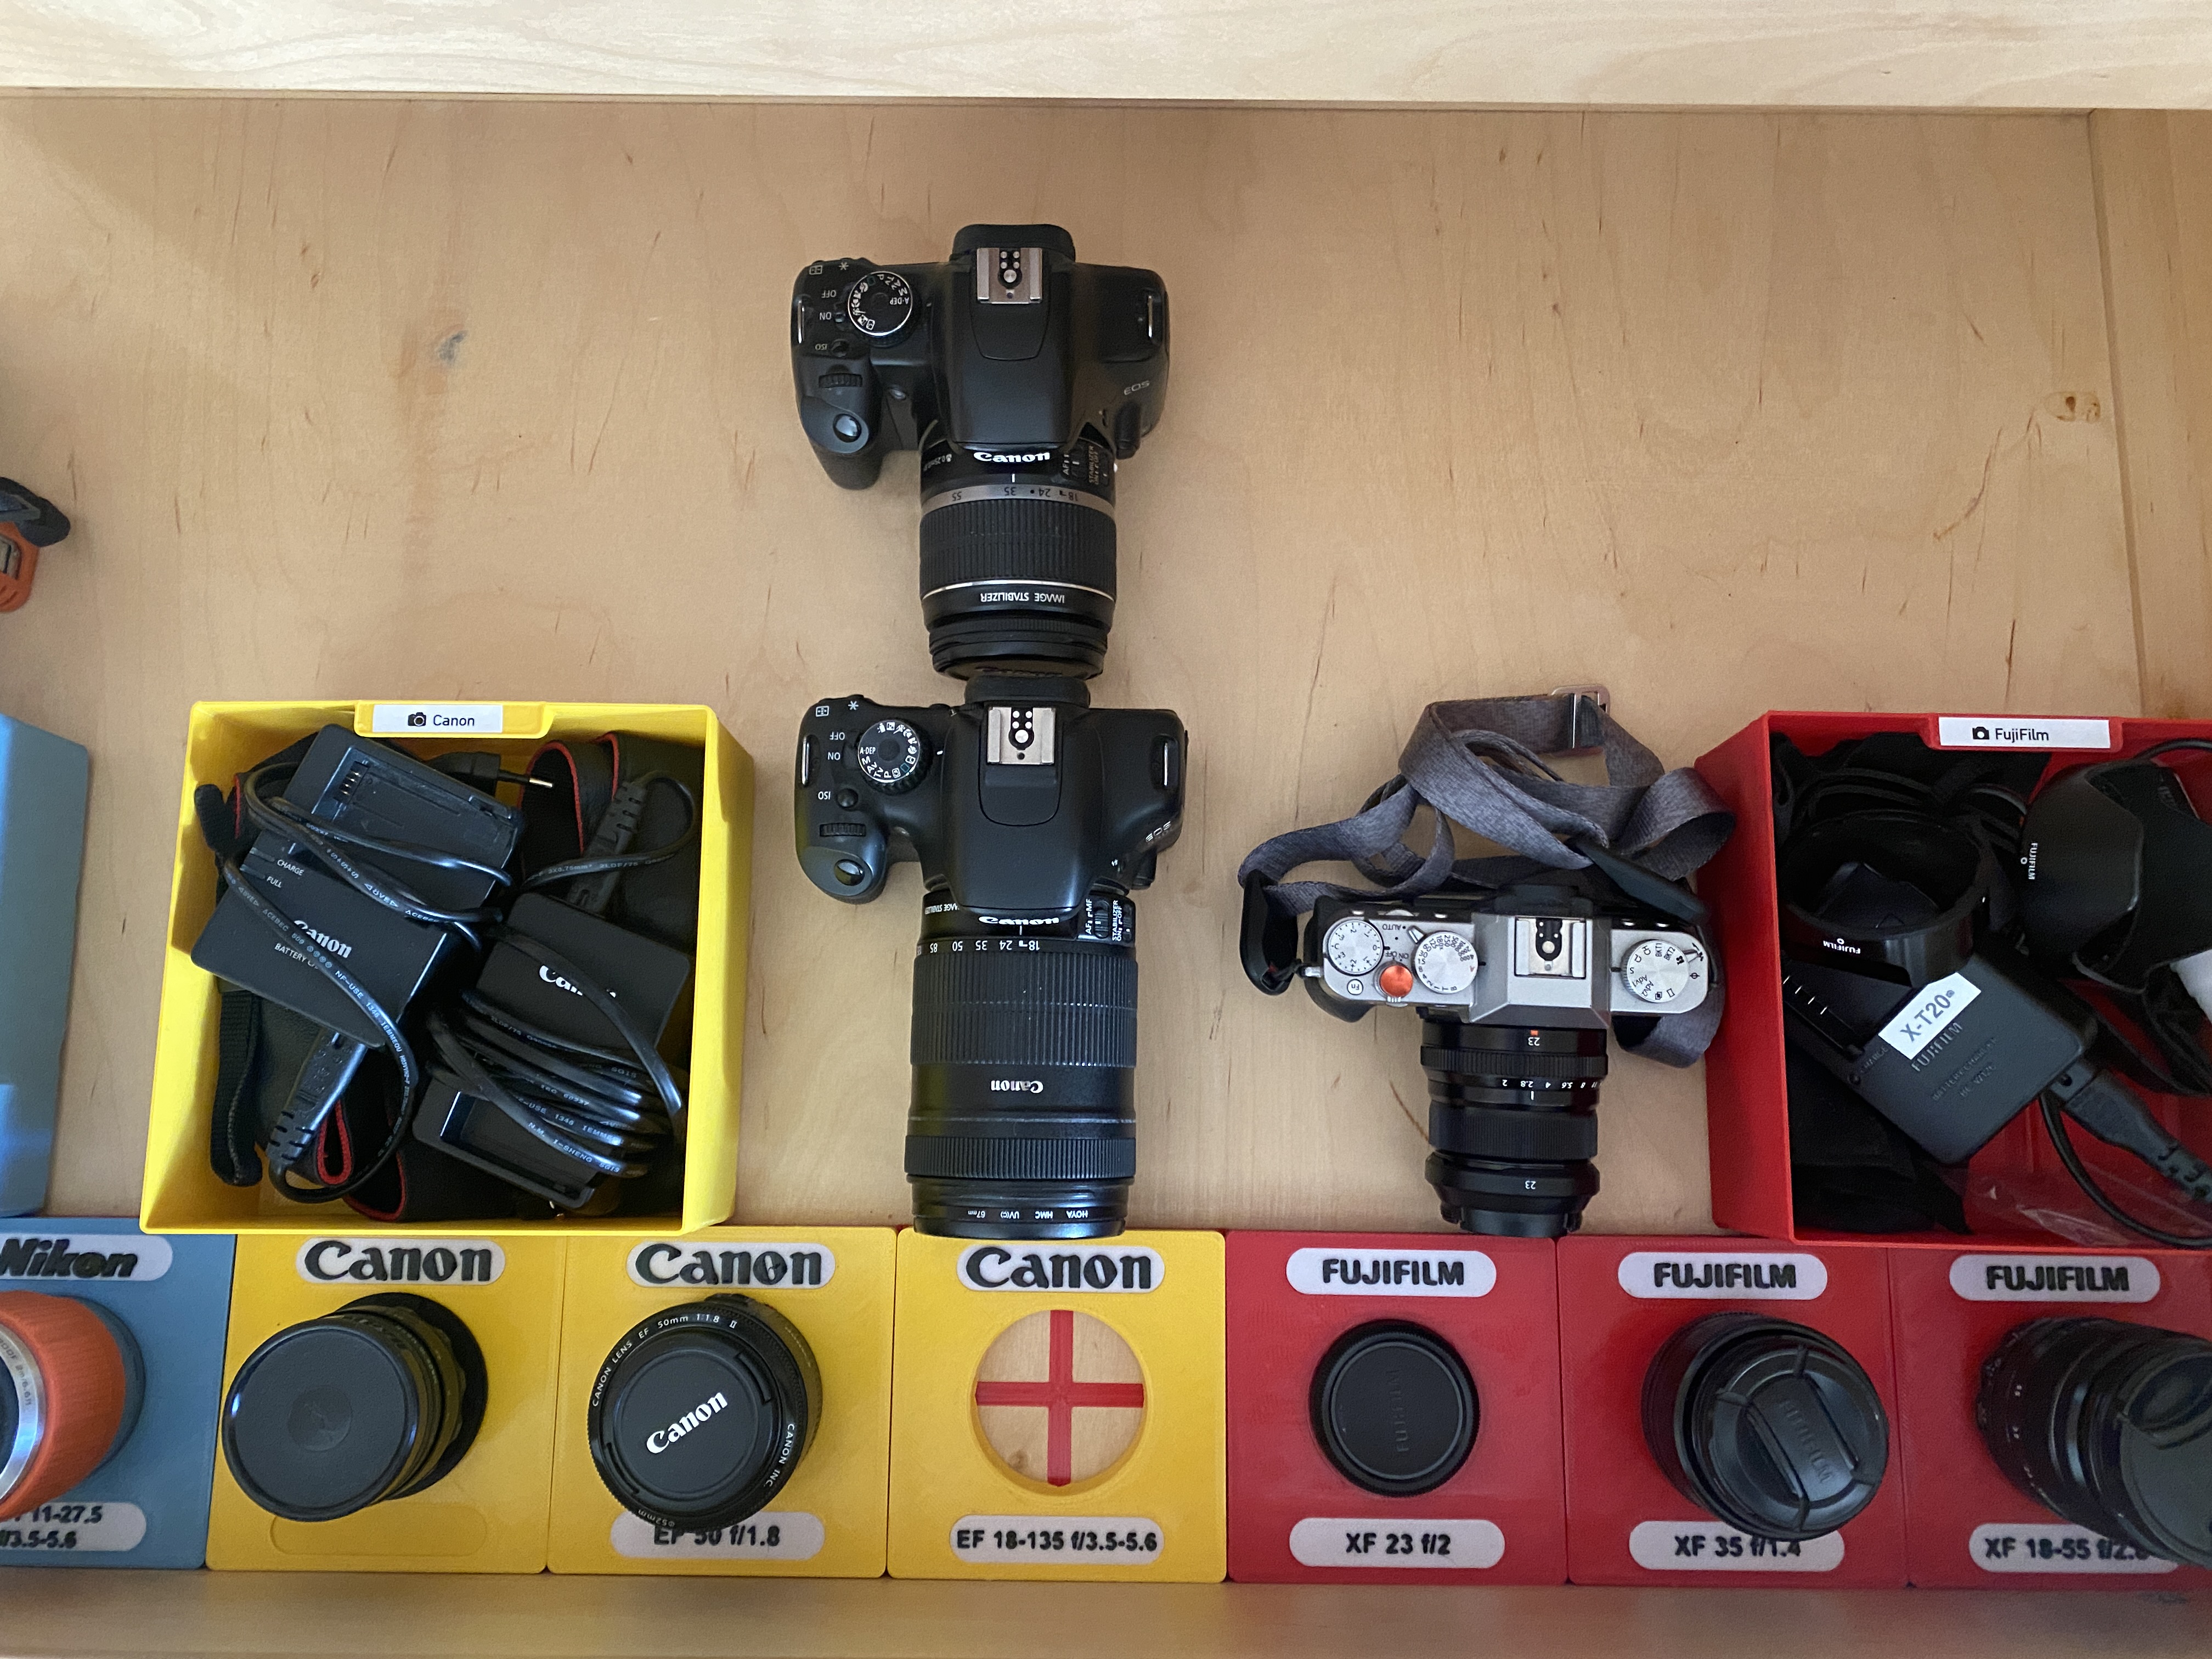 Lens Holder / Organizer - FujiFilm, Nikon, Canon, Sony etc.